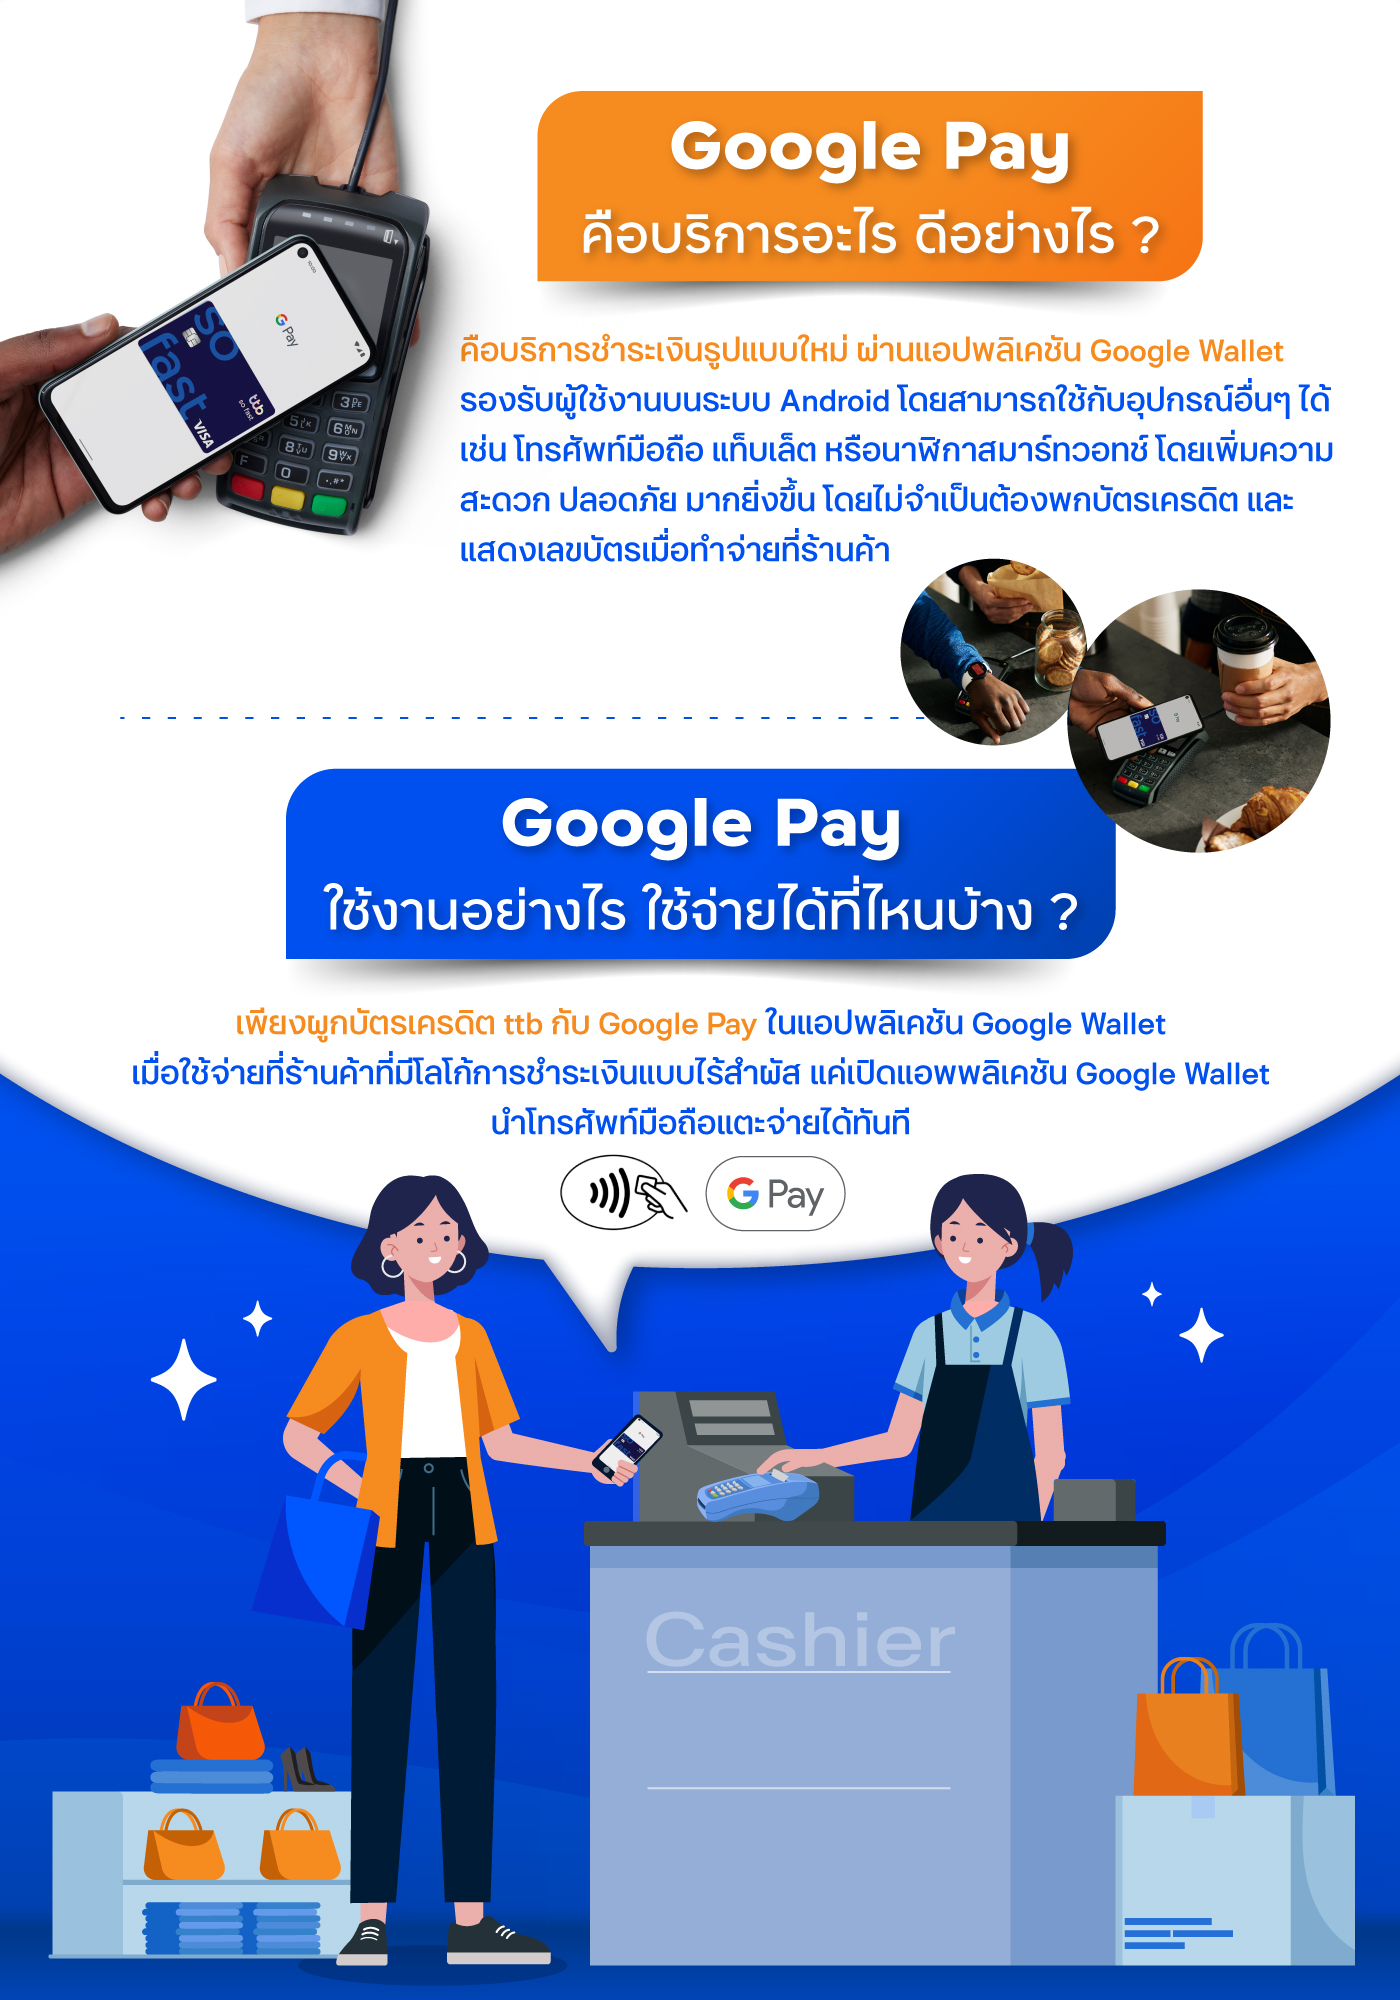 Google Pay คือบริการอะไร ดีอย่างไร ?